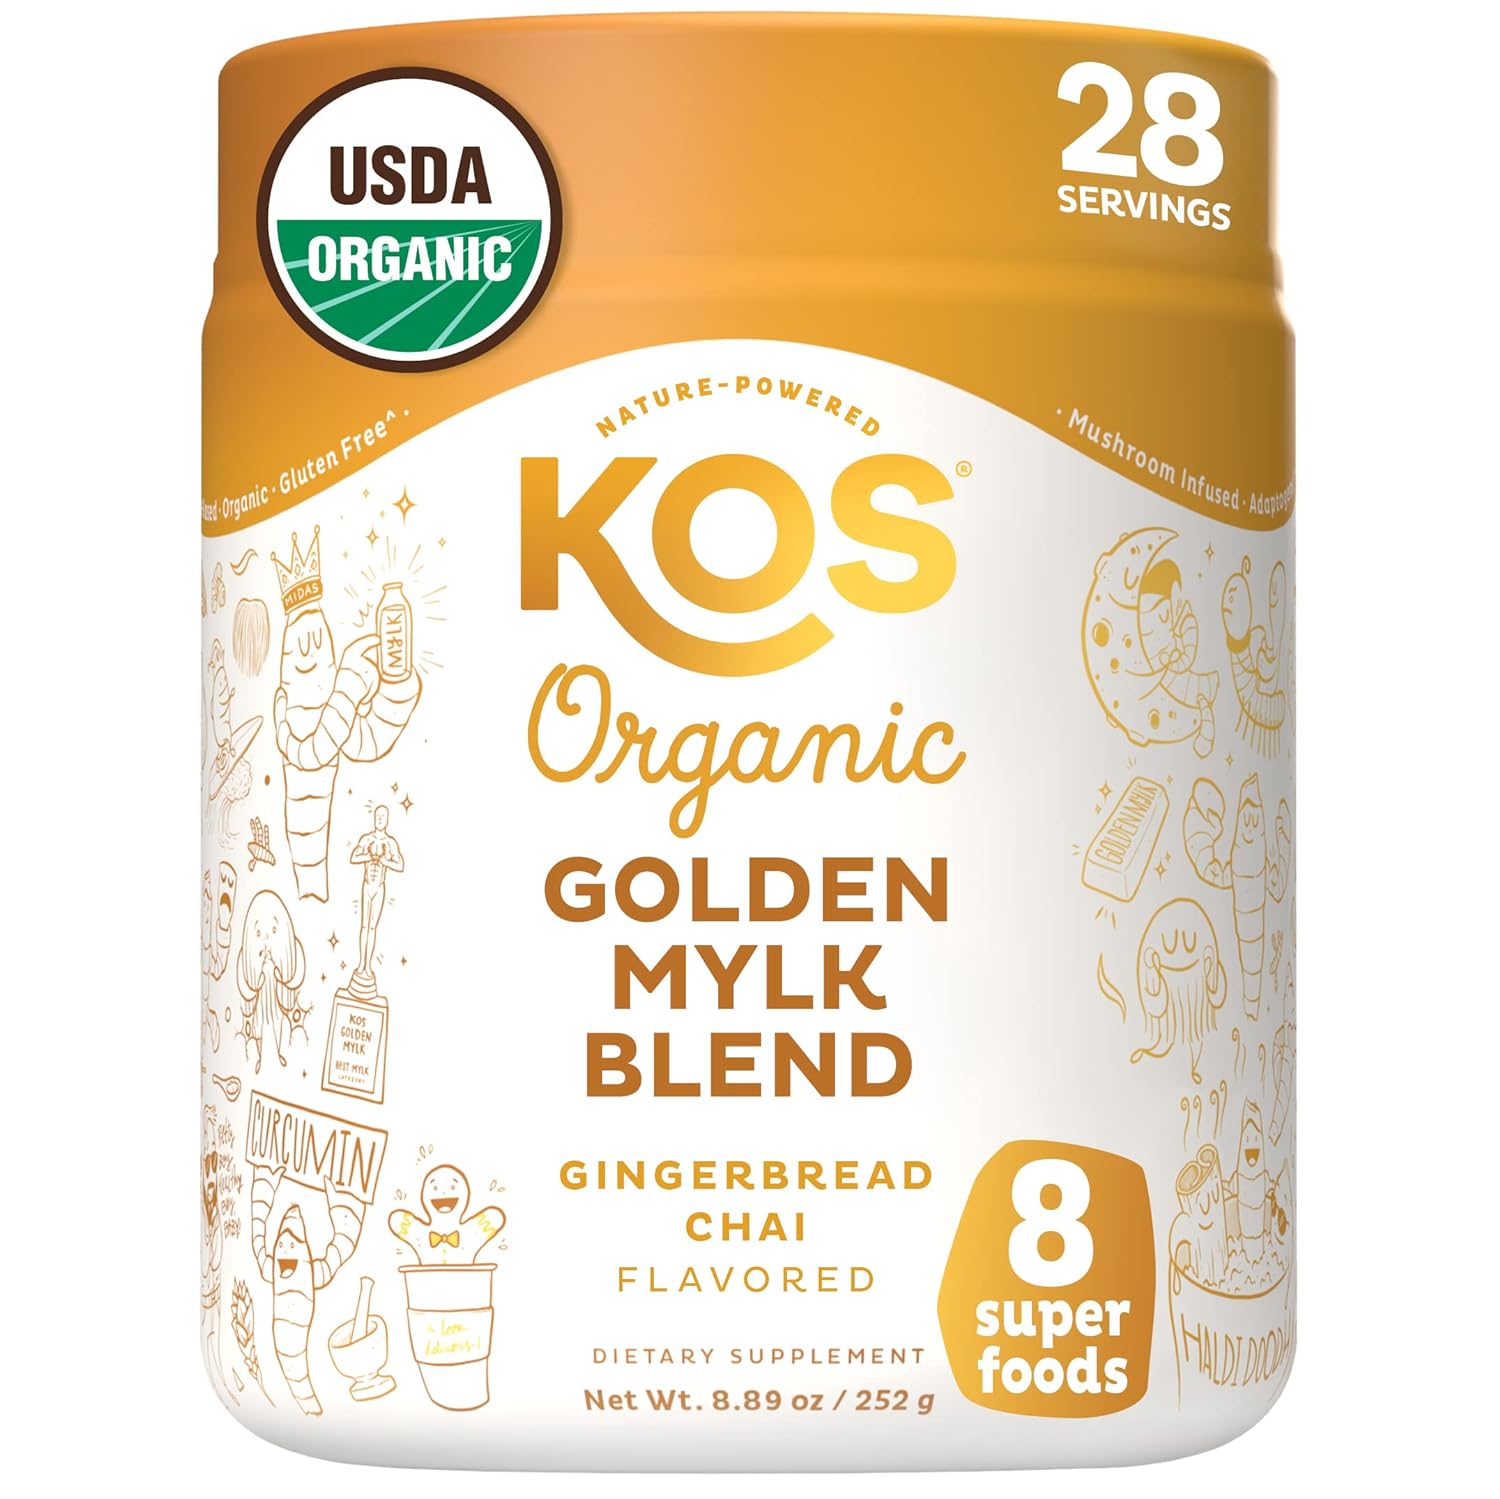 KOS Golden Milk Powder, USDA Organic Superfoods - Instant Turmeric and Ginger Latte with Mushroom Blend - Coffee Creamer, Dessert & Smoothie - Vegan, Dairy-Free, Gingerbread Chai Flavored, 28 Servings